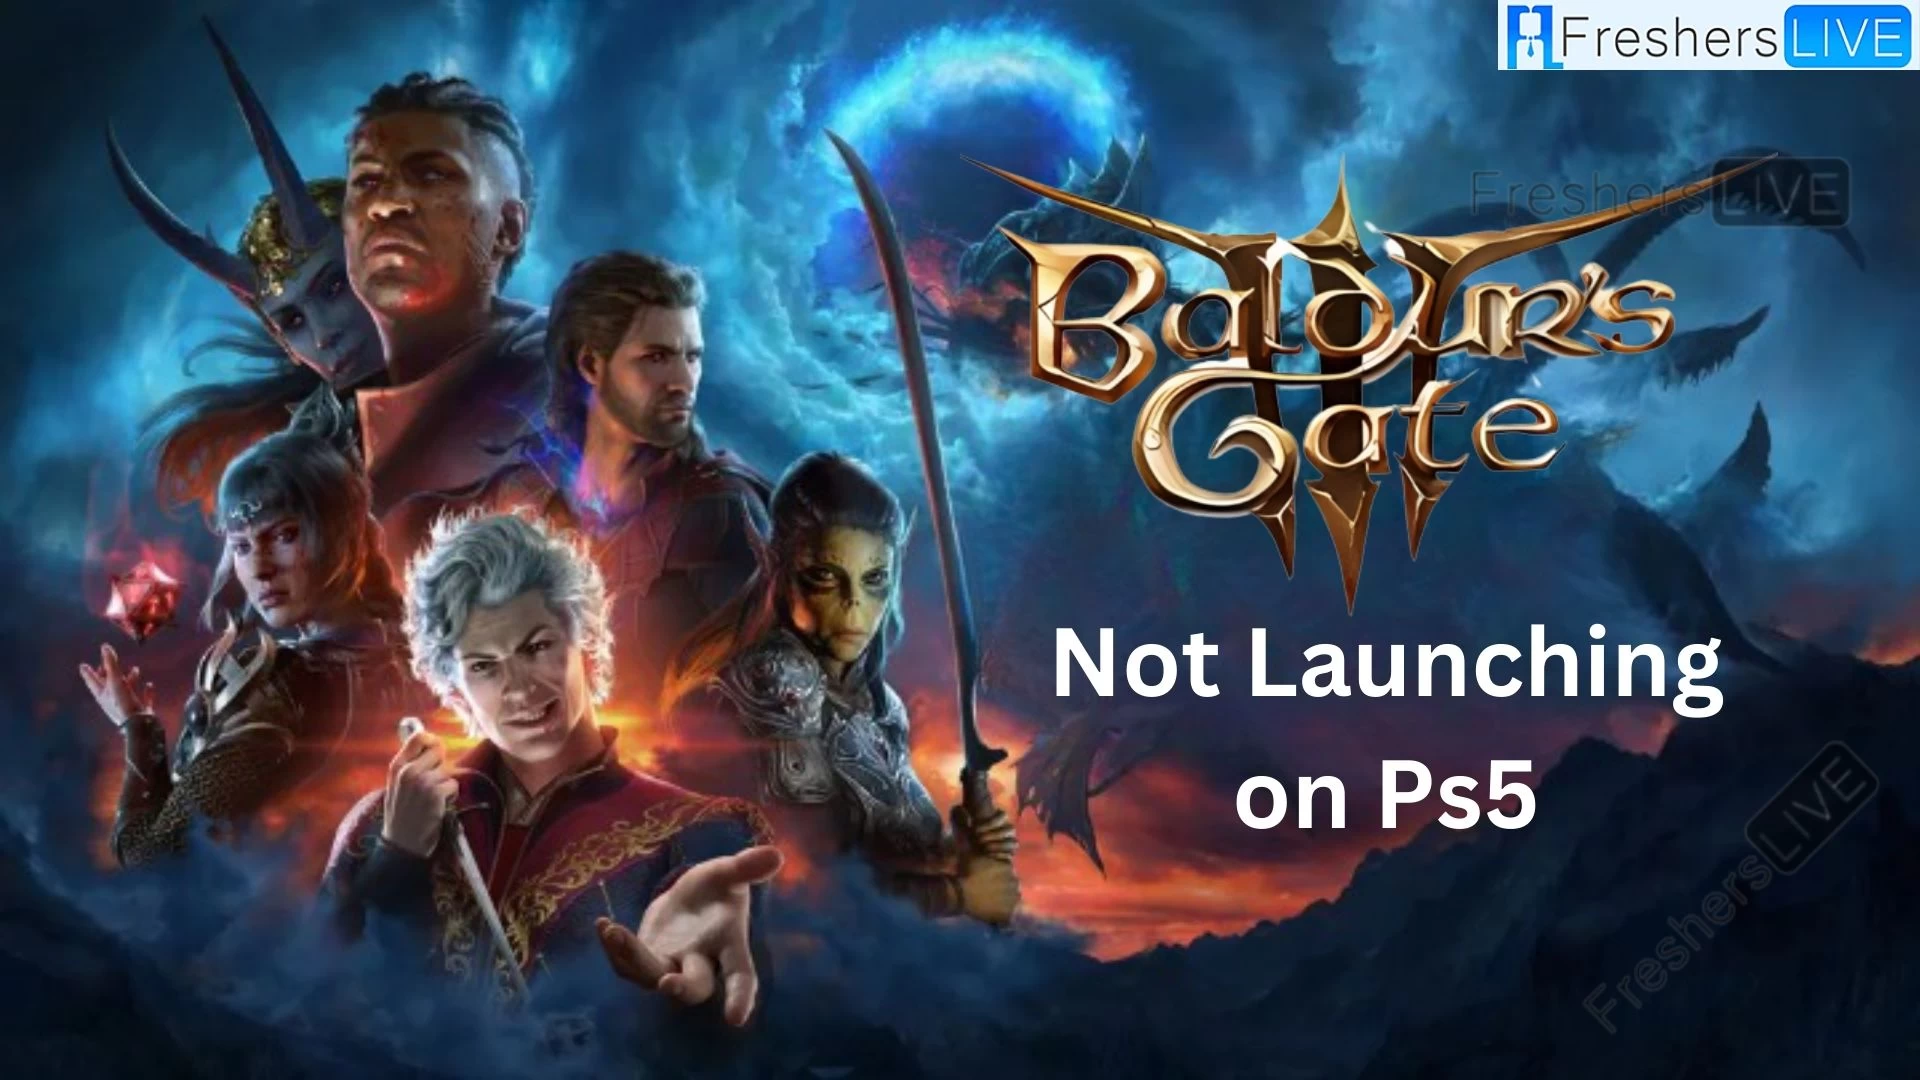 BG3 Not Launching PS5, How to Fix Baldurs Gate 3 Not Launching on PS5?